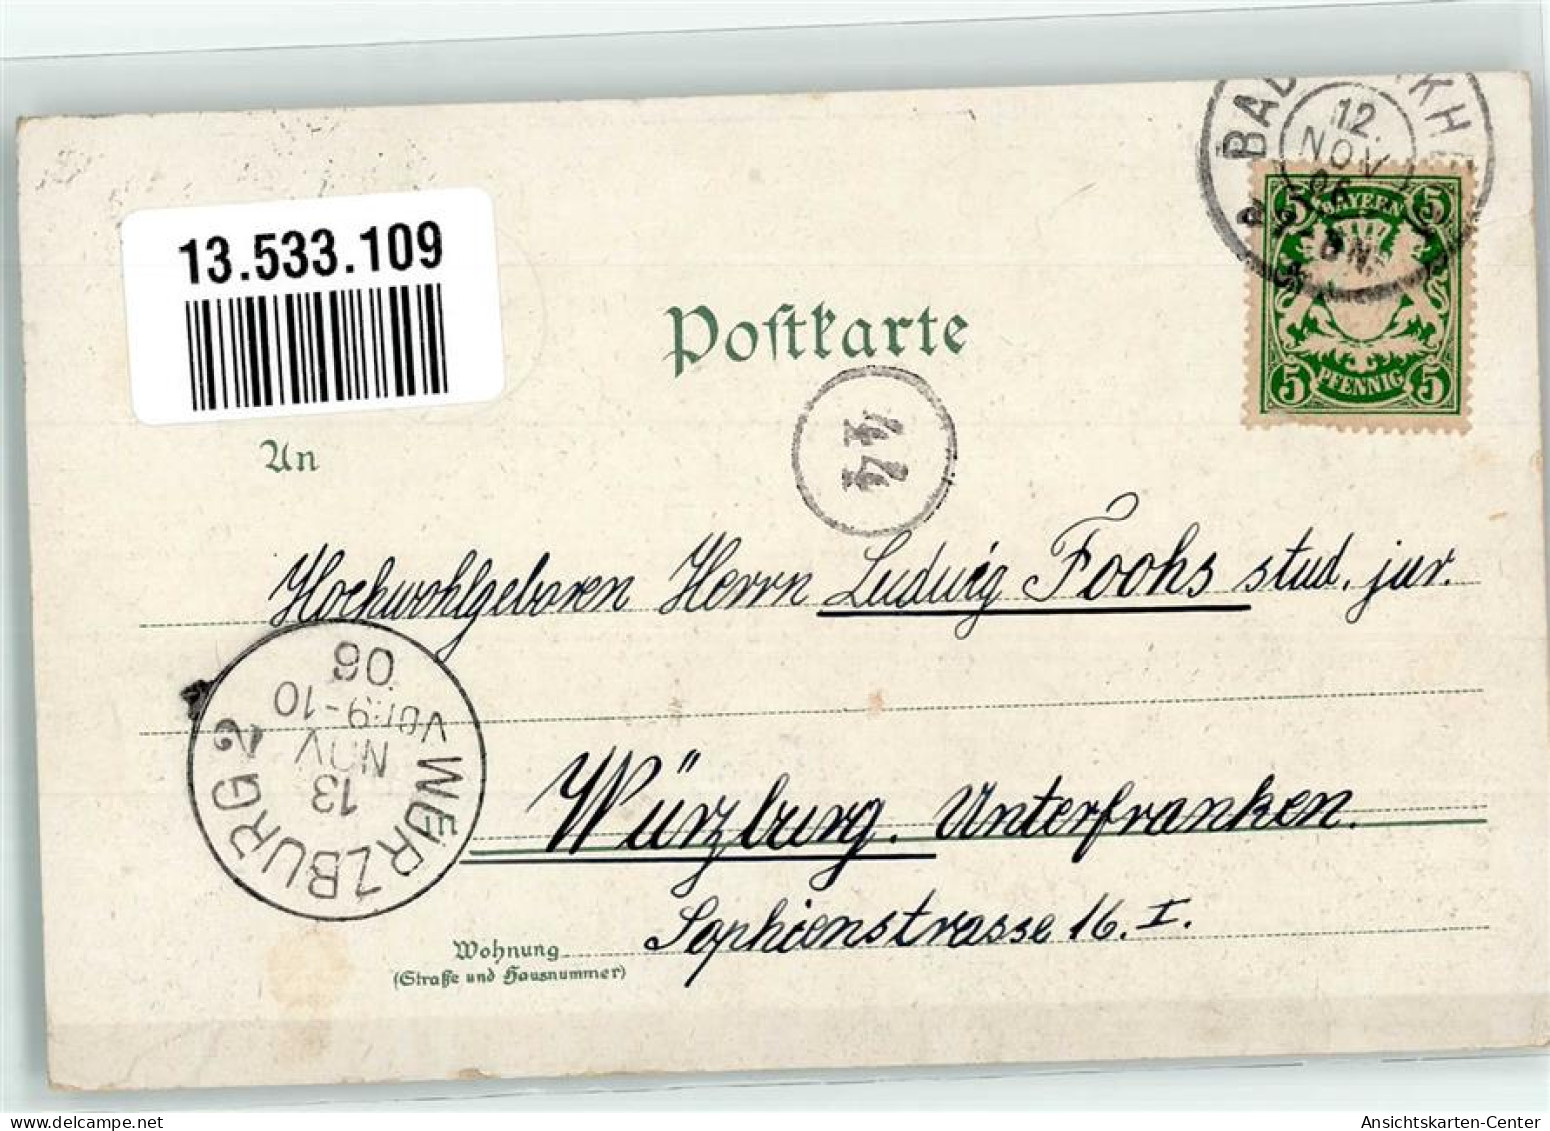 13533109 - Bad Duerkheim - Bad Dürkheim